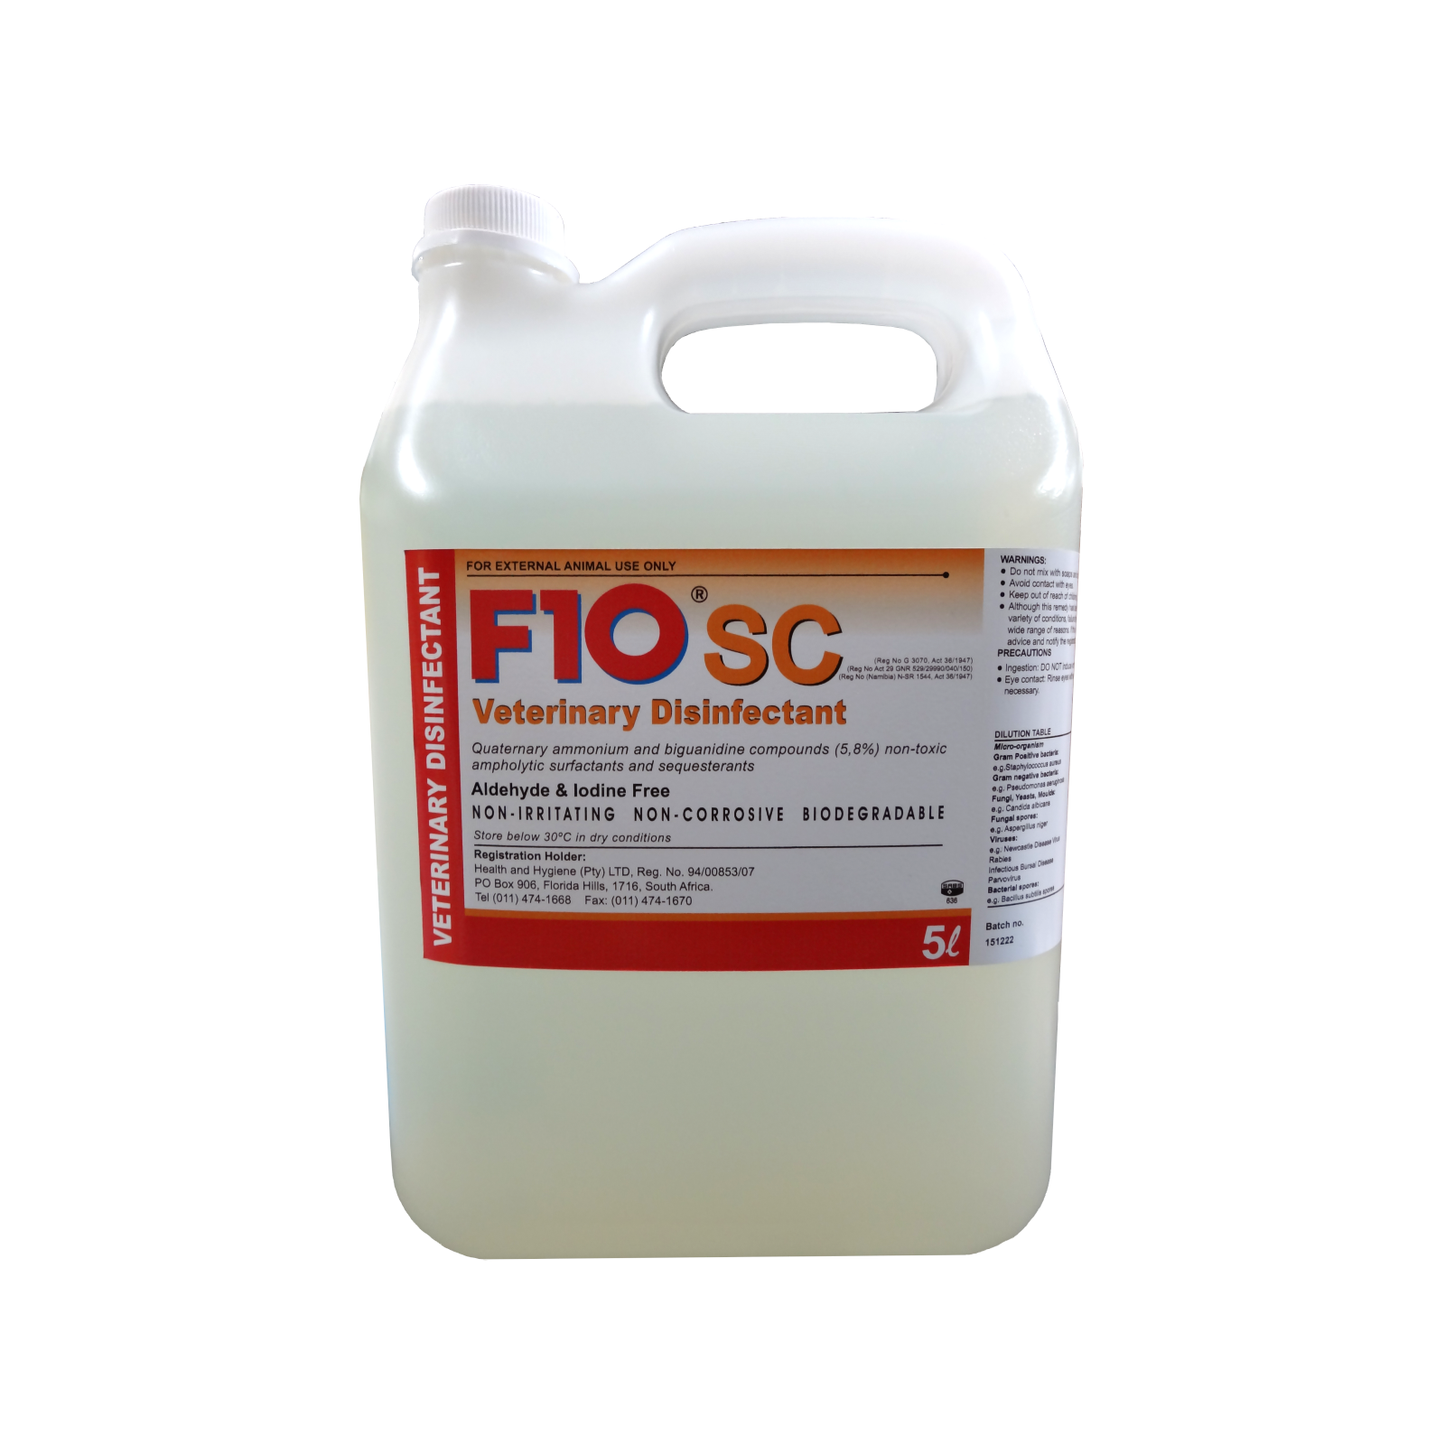 A 5 litre bottle of F10SC Veterinary Disinfectant